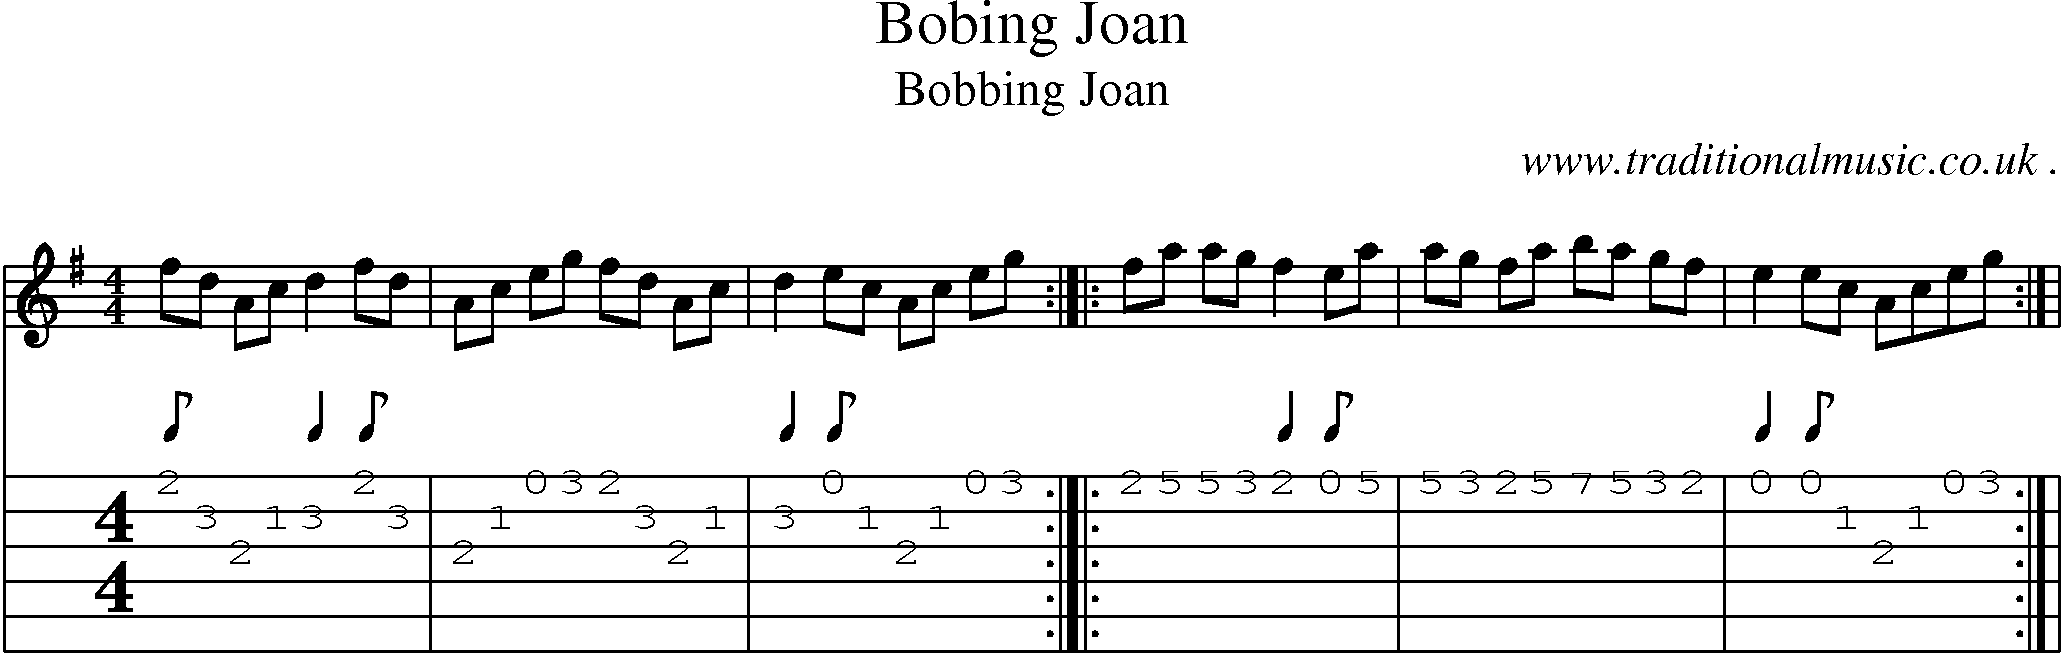 Sheet-Music and Guitar Tabs for Bobing Joan